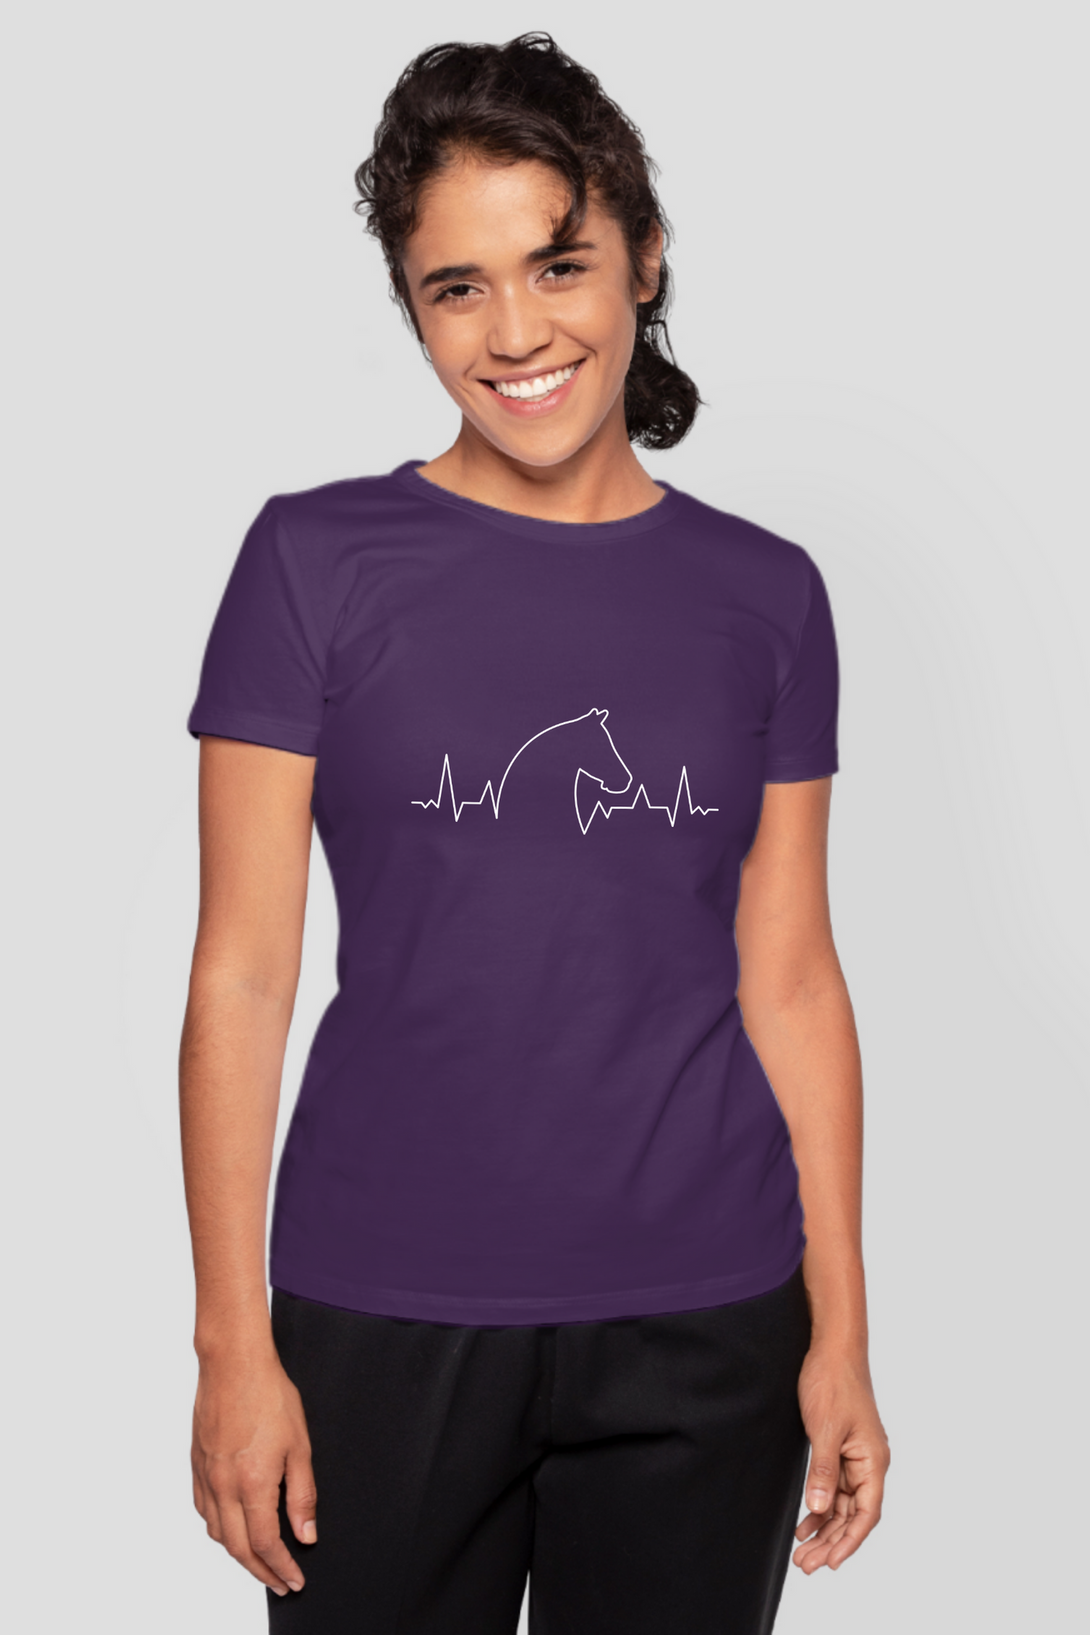 Horse Heartbeat Printed T-Shirt For Women - WowWaves - 7